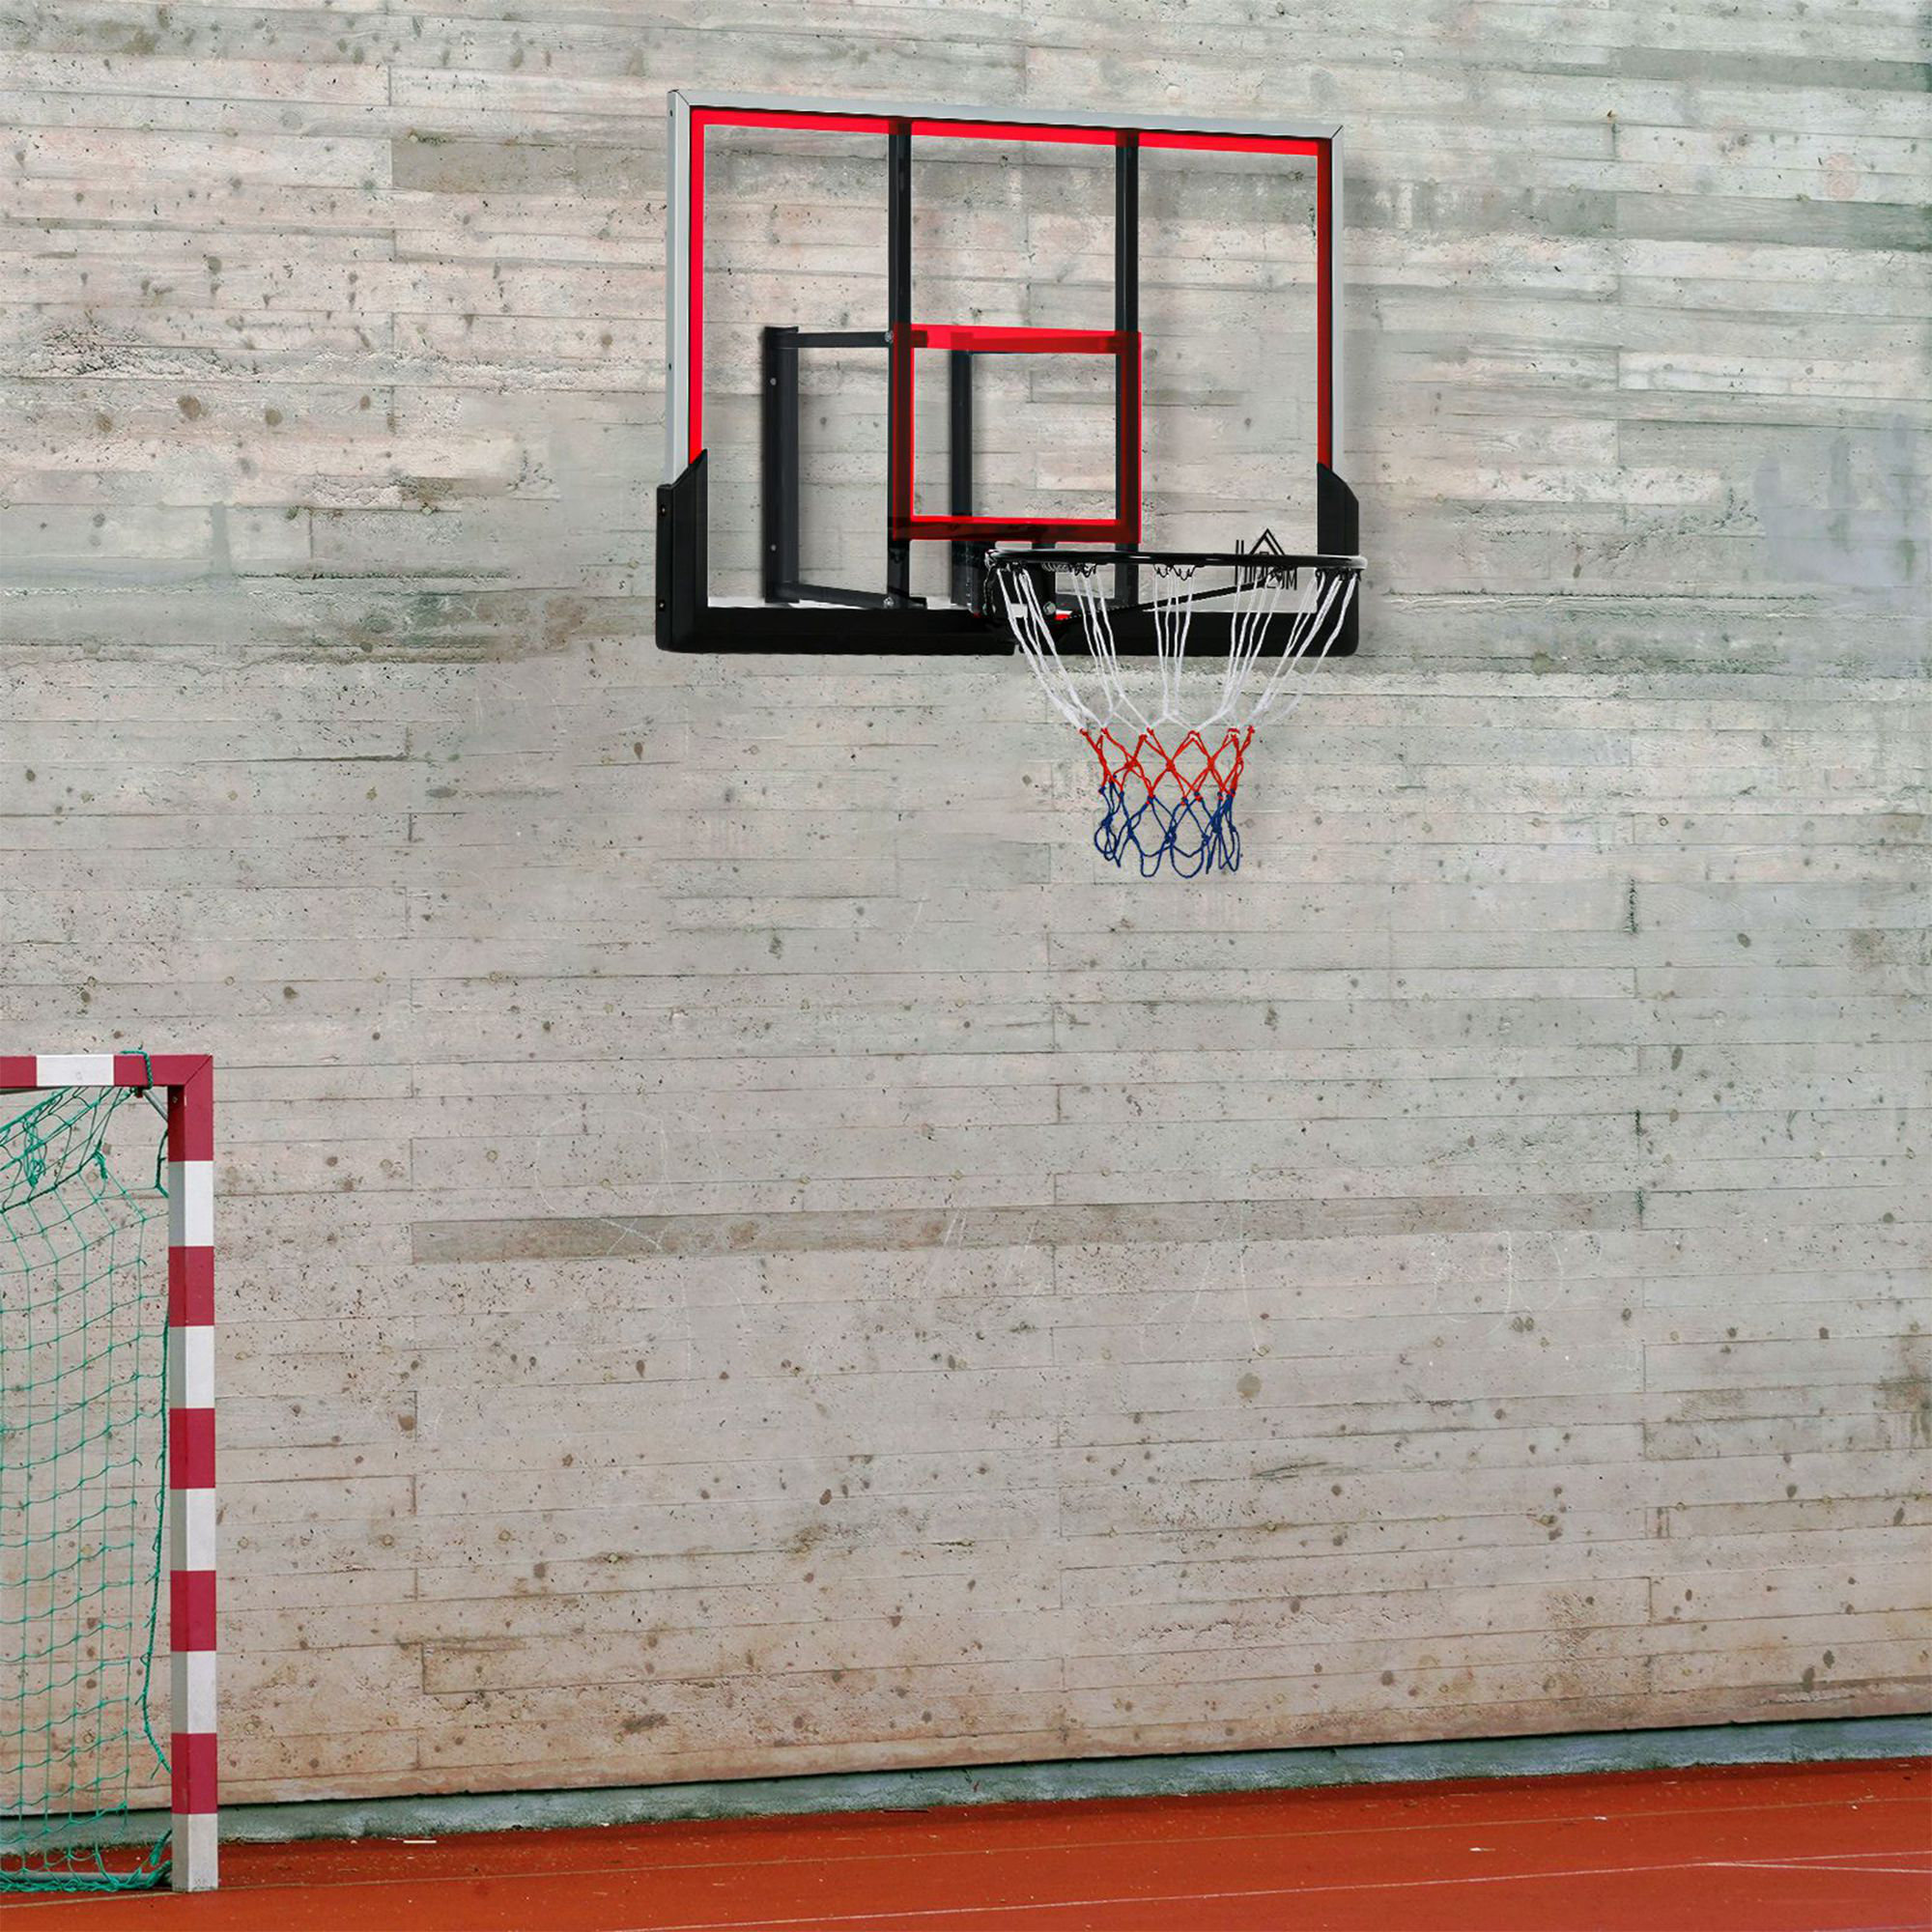 Soozier Wall Mounted Basketball Hoop with Shatter Proof Backboard, Black